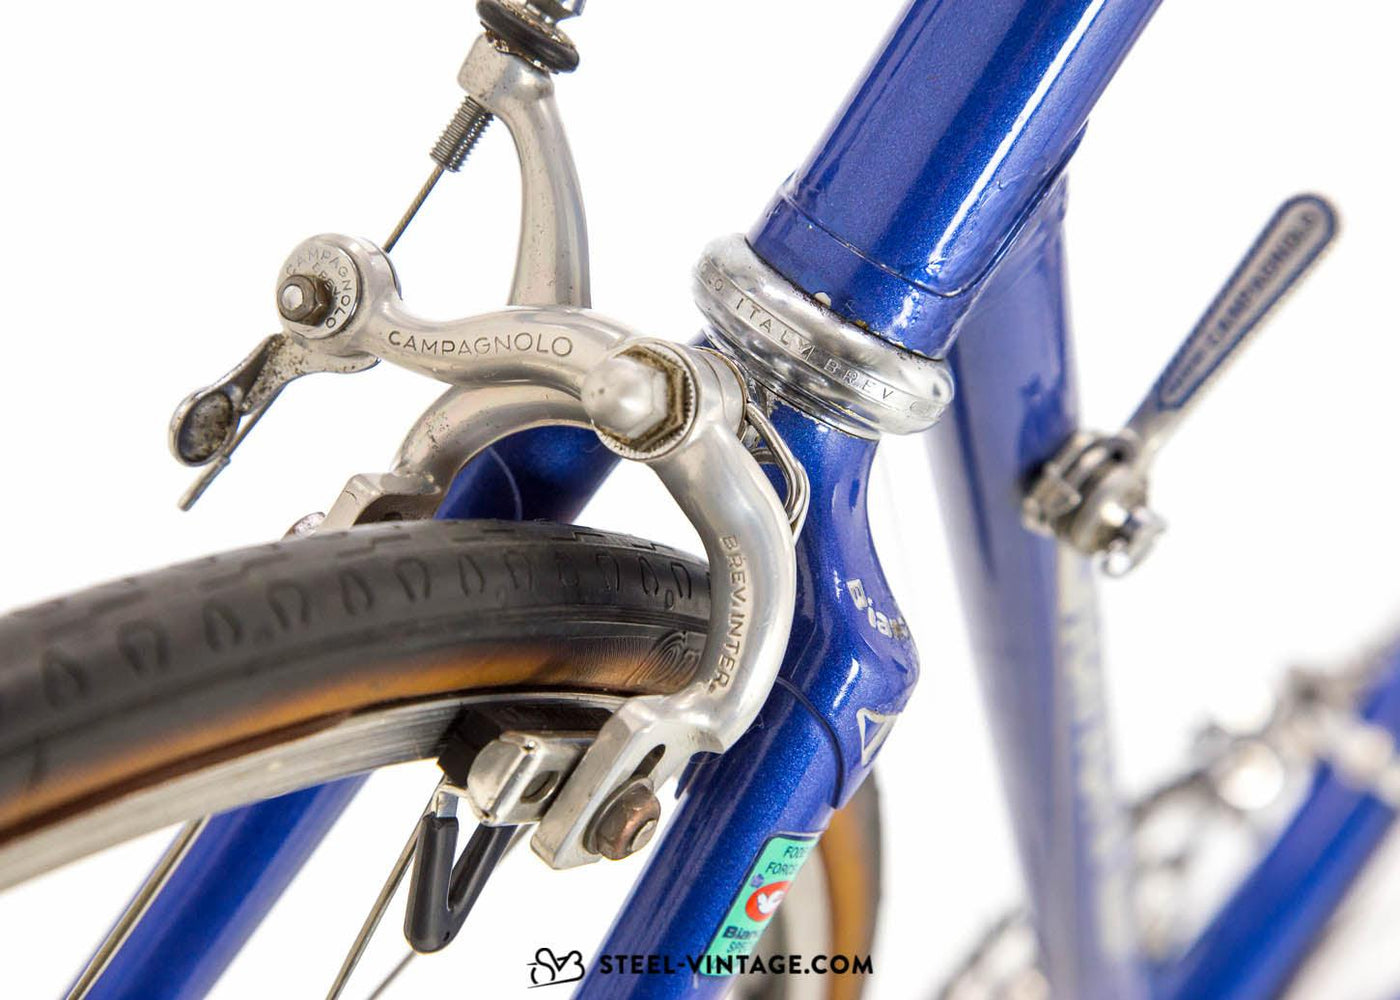 Bianchi Campione d'Italia Classic Road Bike 1980s - Steel Vintage Bikes